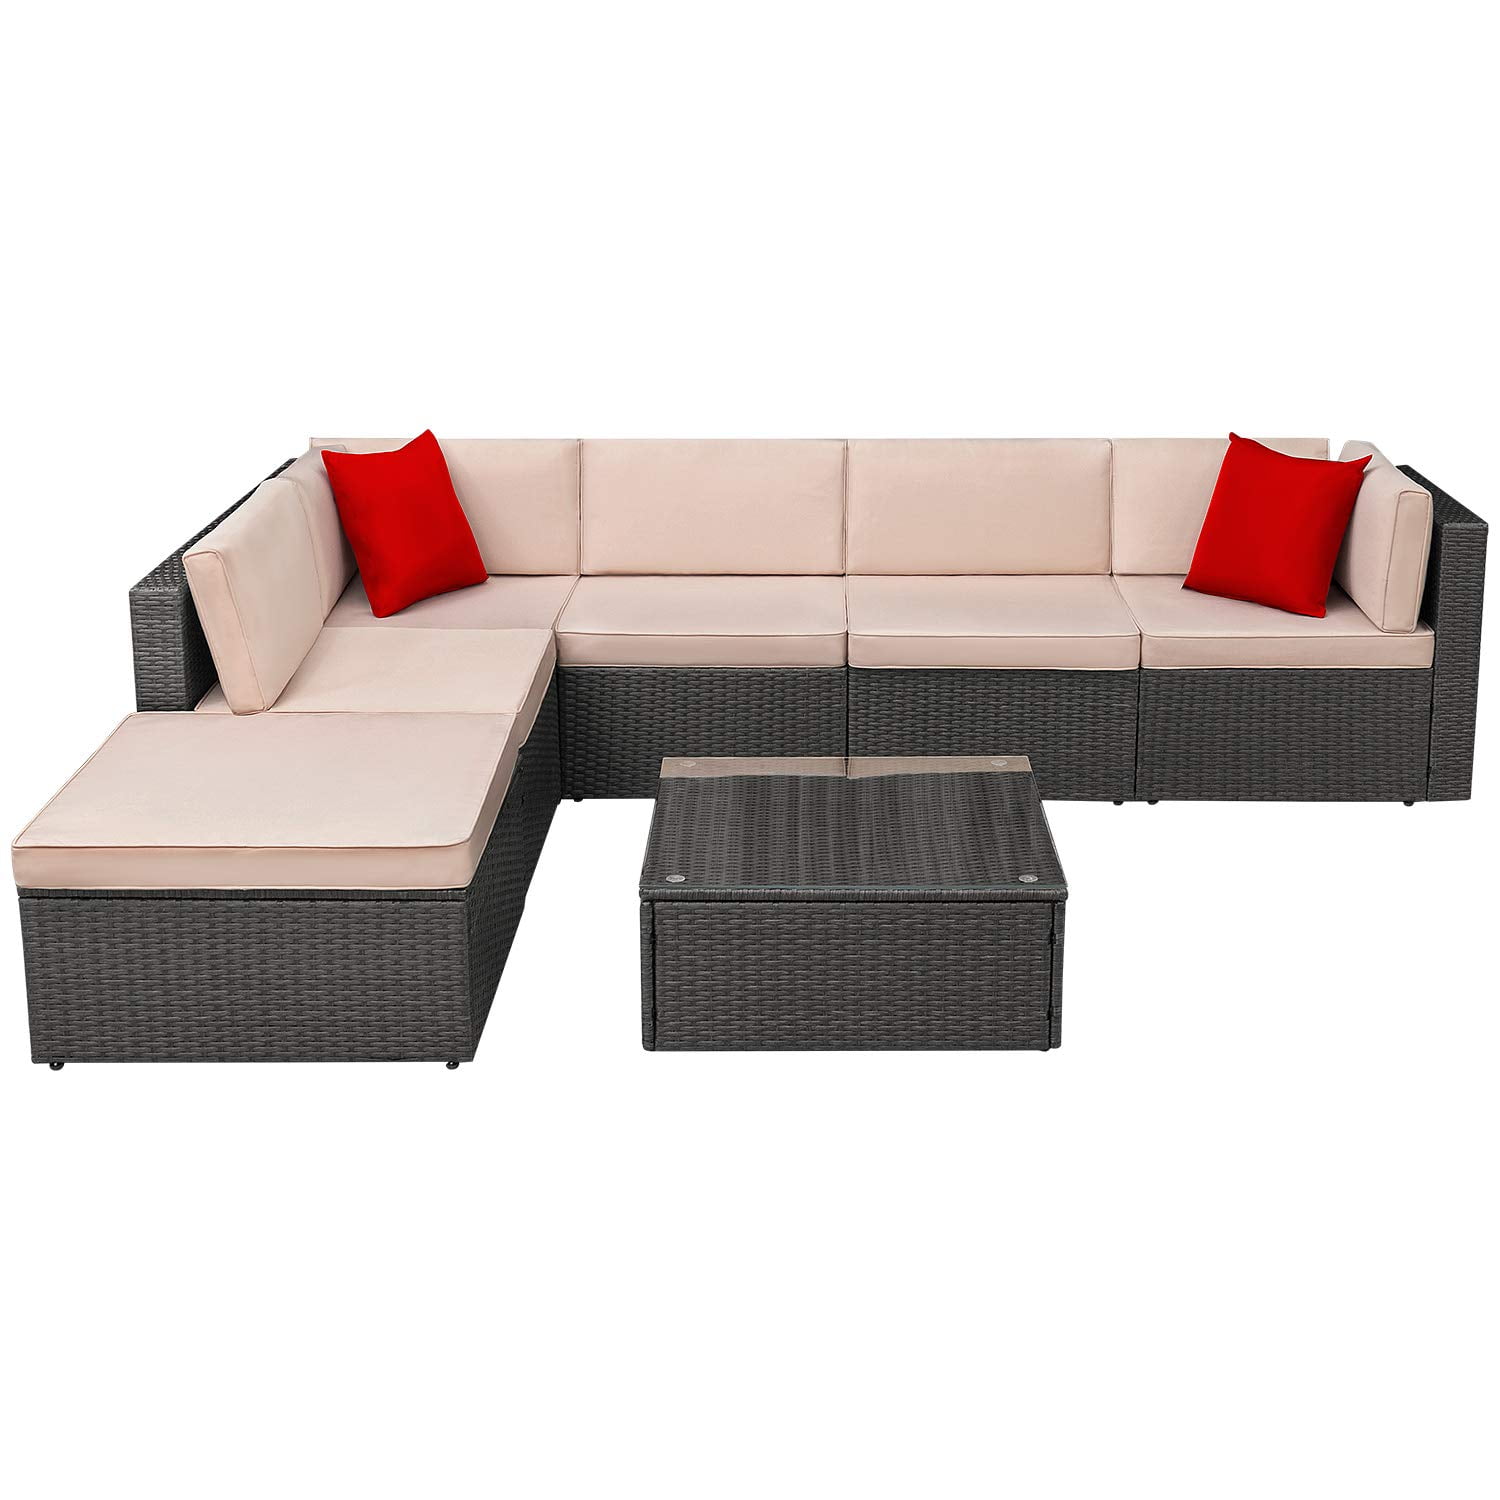 Red kinbor Patio Wicker Furniture Sectional Sofa Seat Rattan Patio Seating Cushion Cover Set 